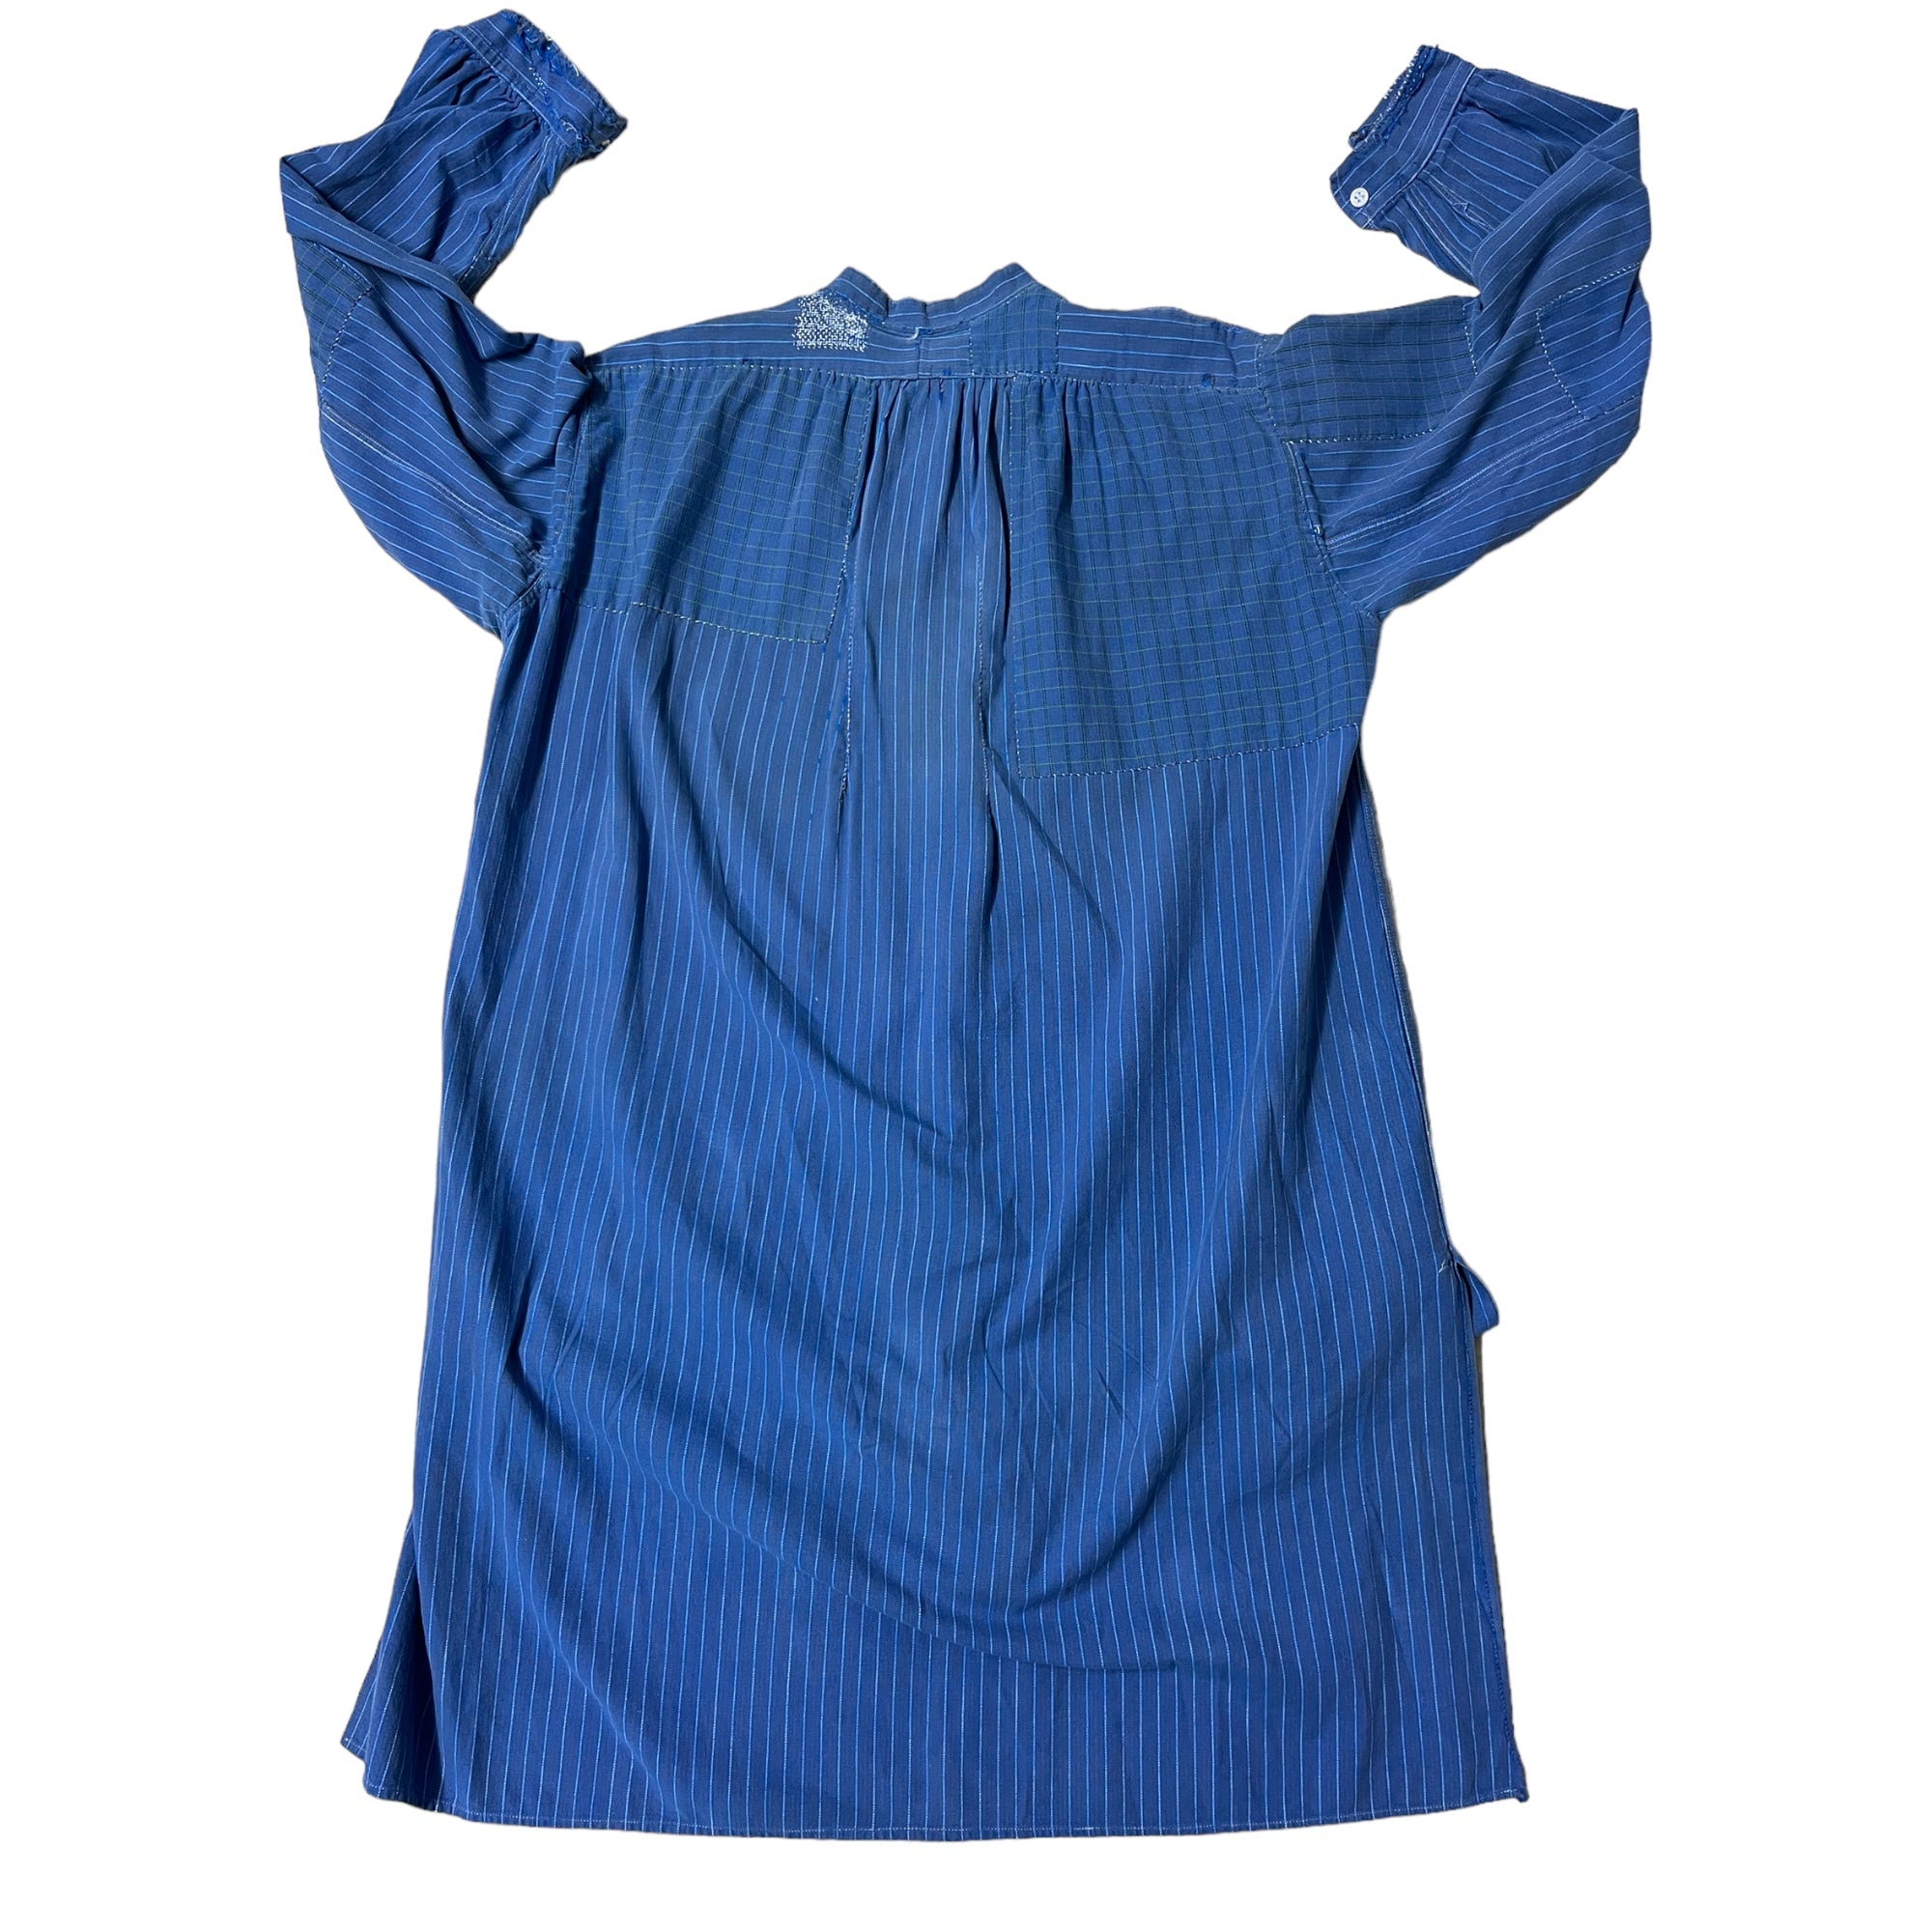 1950s French ‘Bolan’ Brand Distressed Grandfather Work Shirt / Dress - Blue - M/L